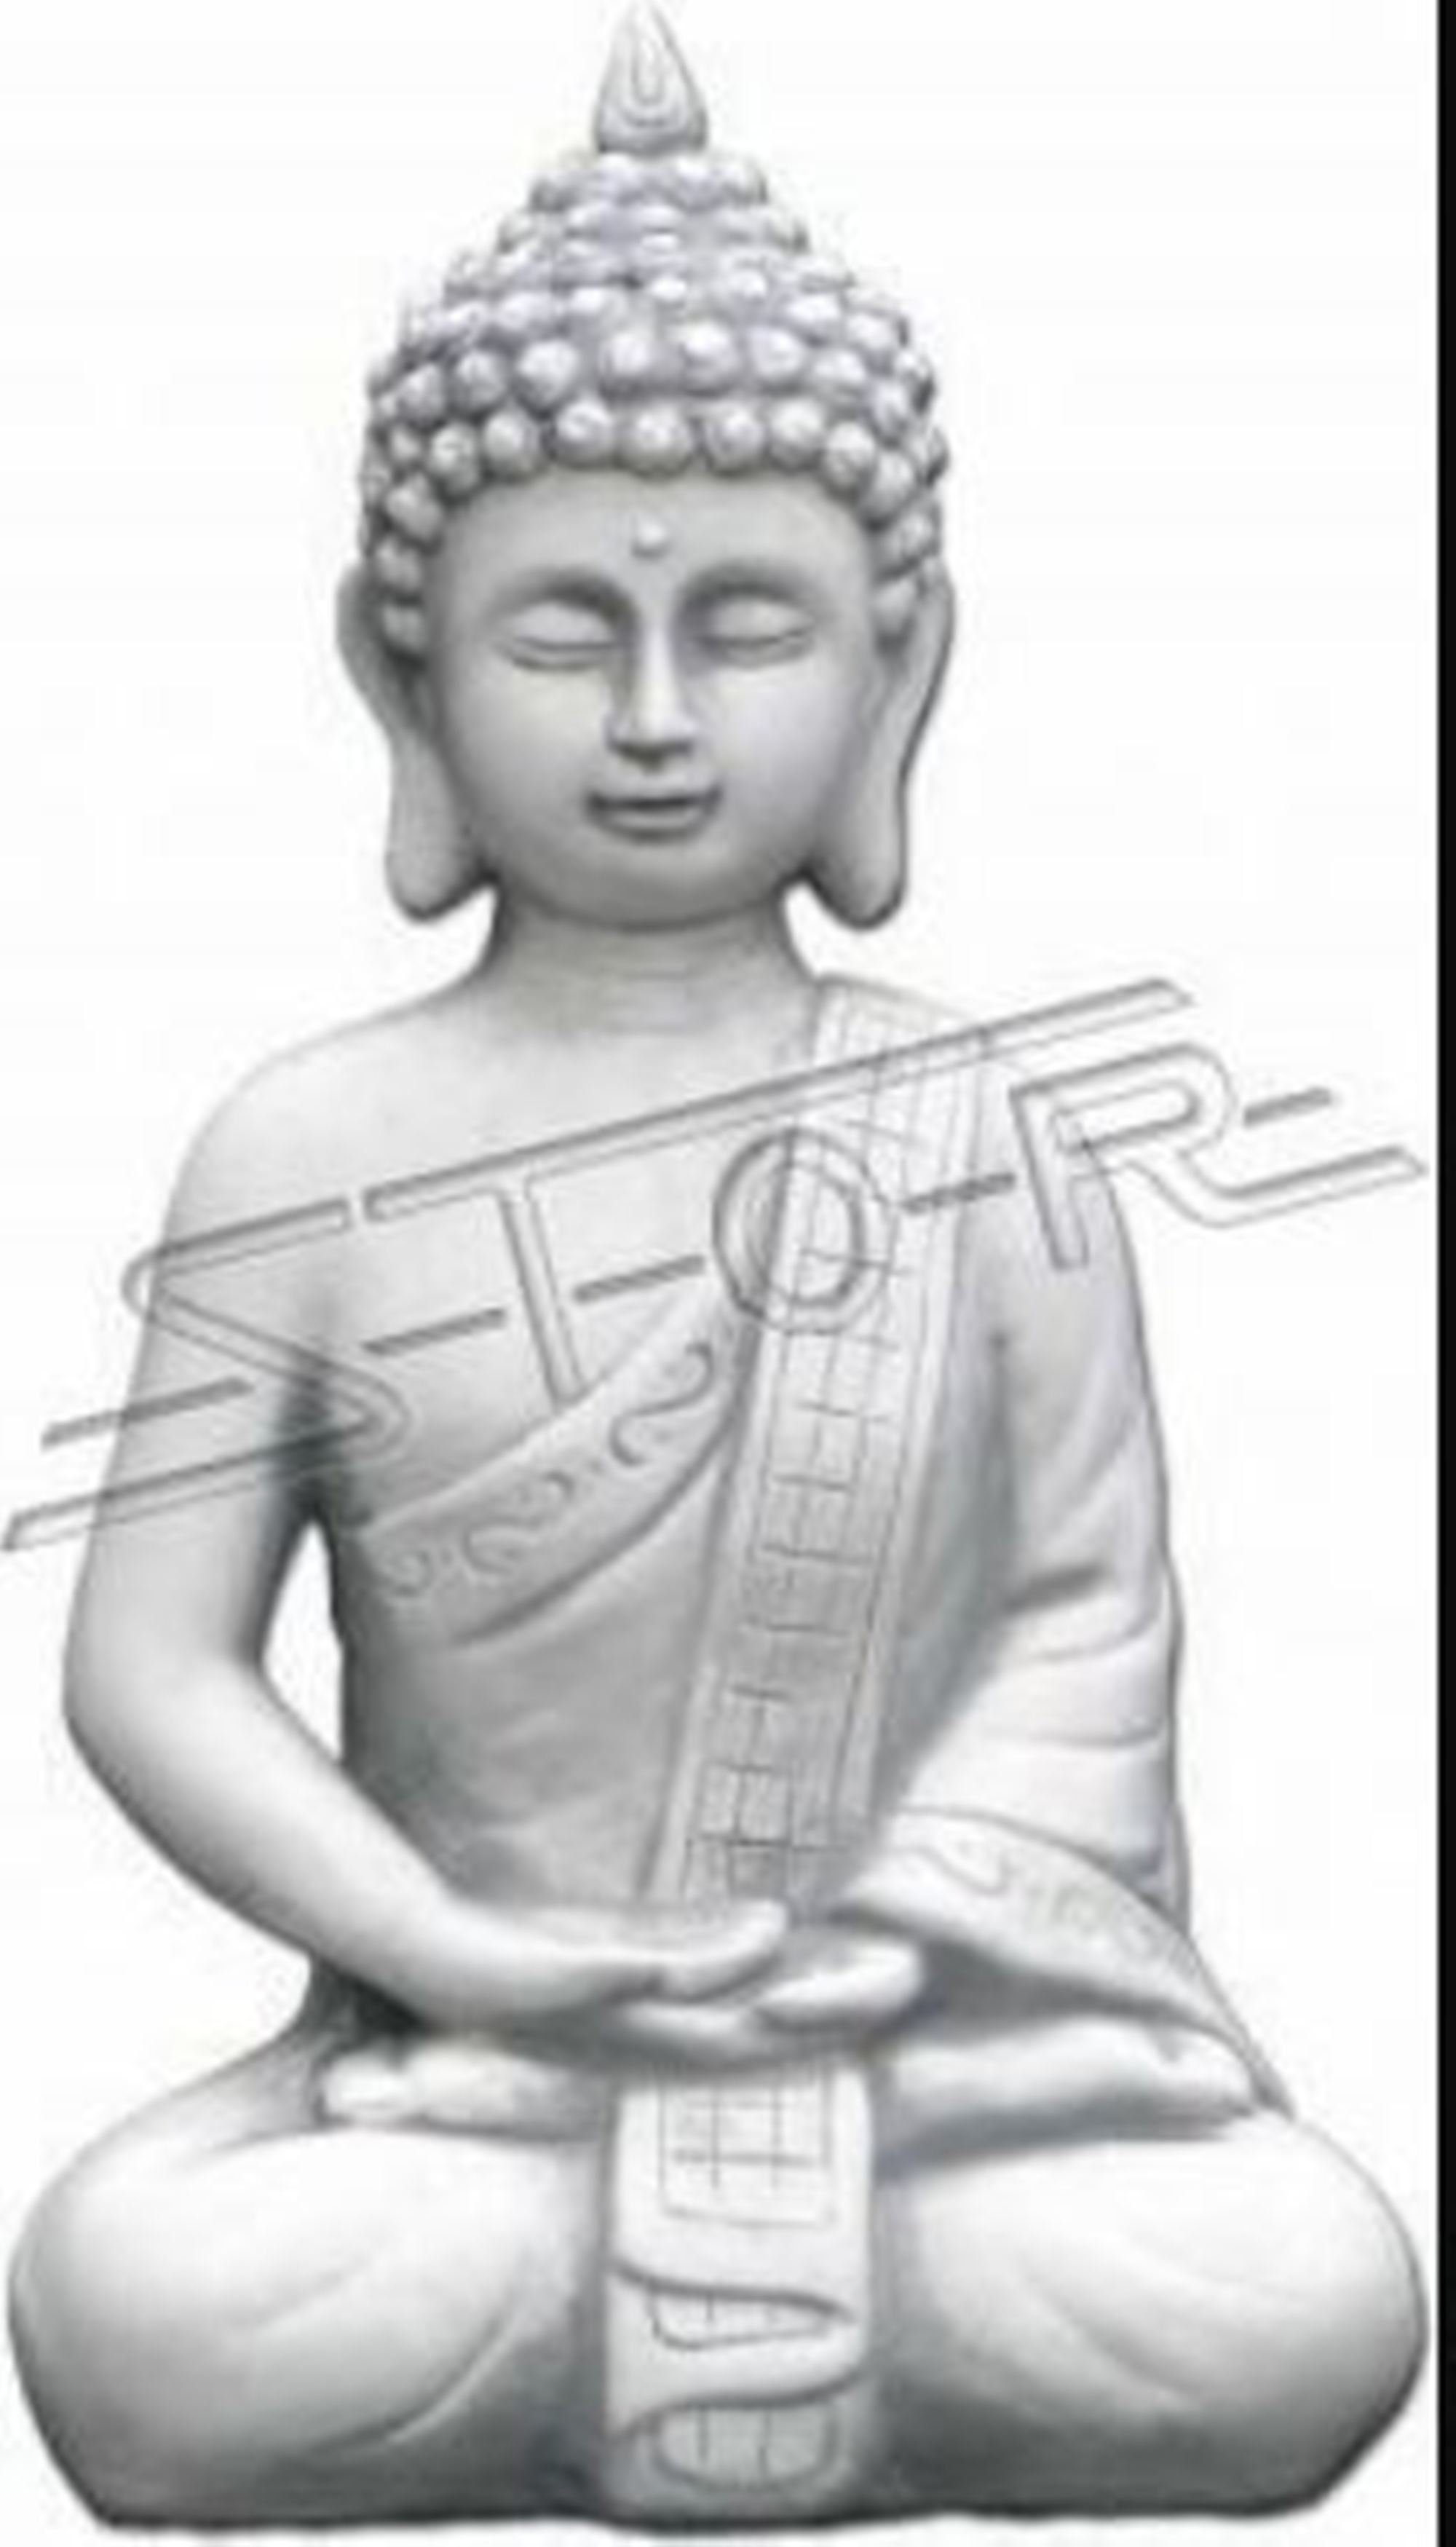 33cm statue garten Skulptur buddha skulptur statuen figuren malaysia JVmoebel figur